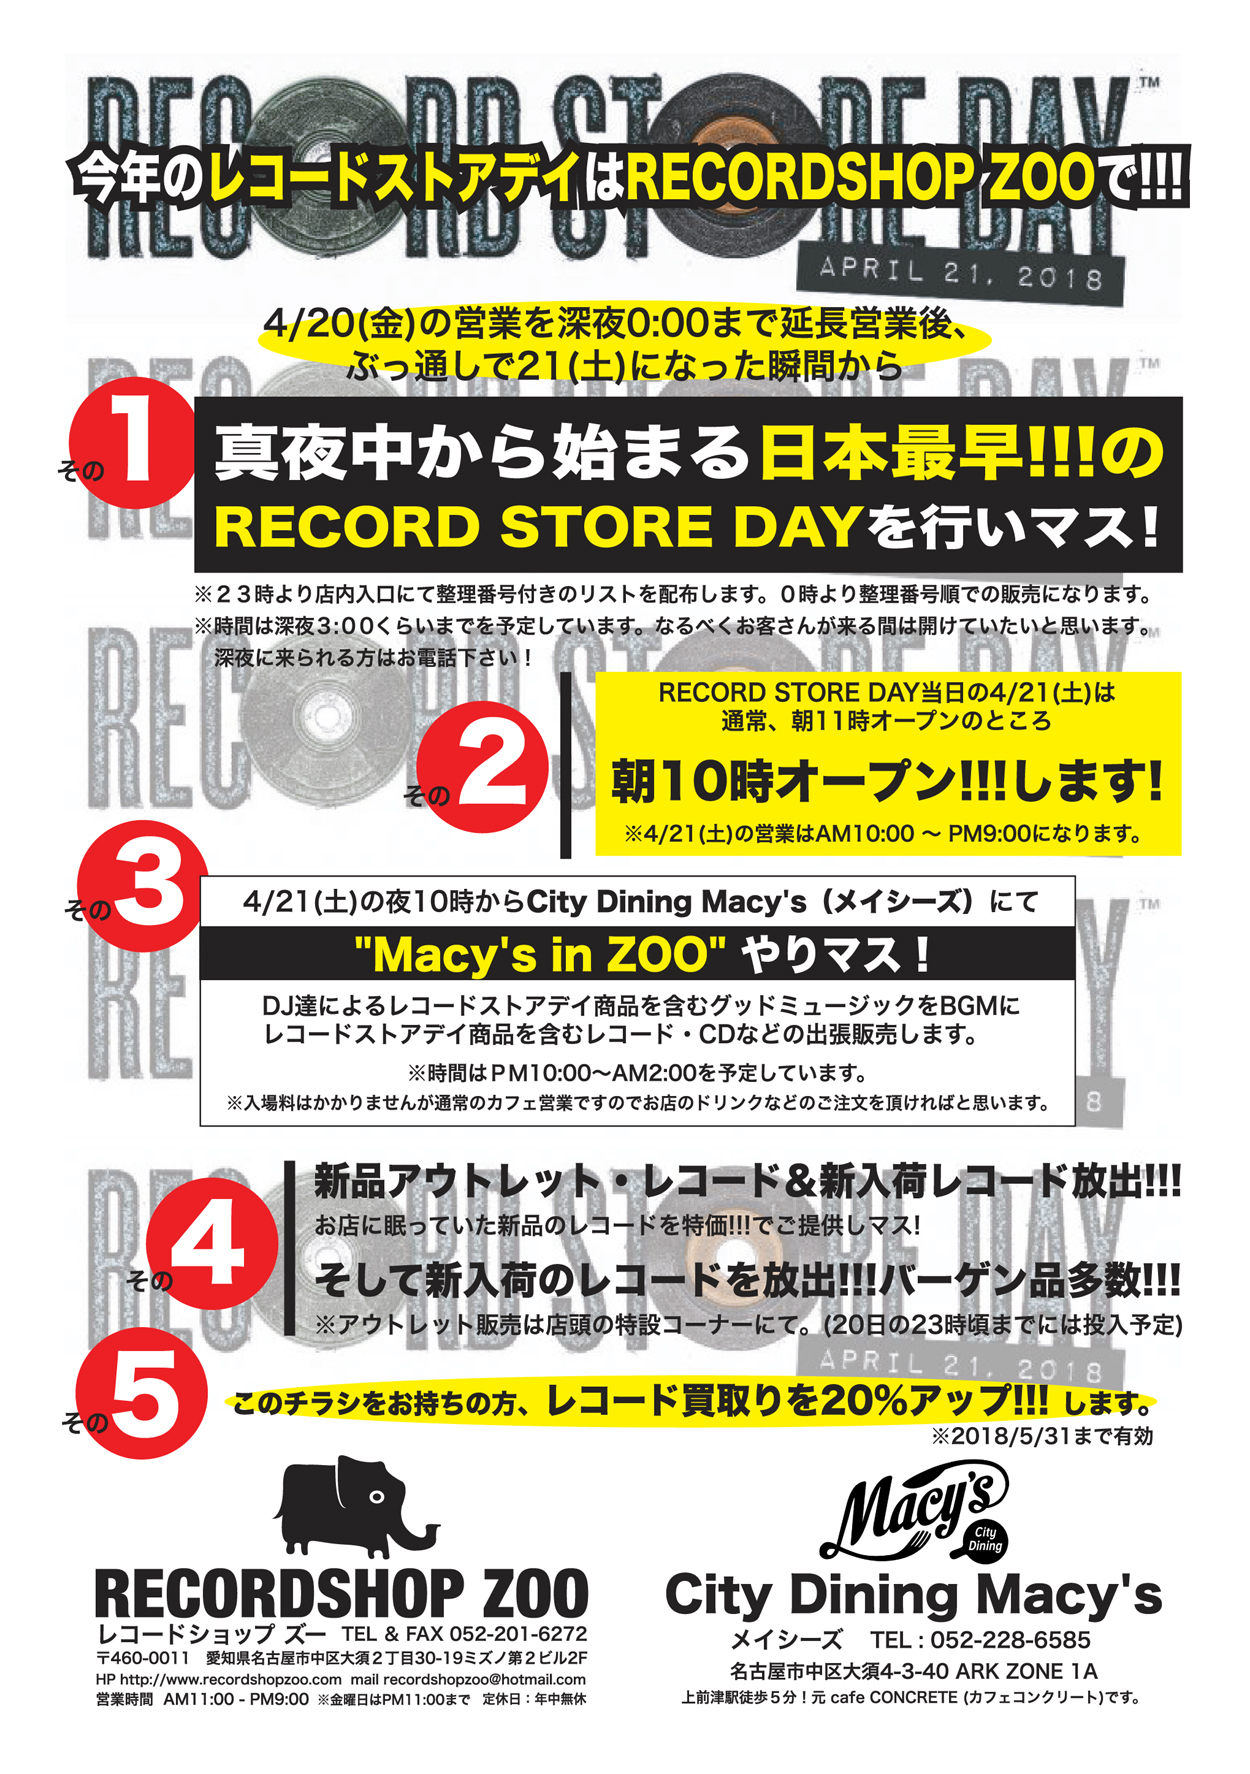 RECORD STORE DAY 2018詳細。 | 大須レコード中古買取・レコードショップZOO